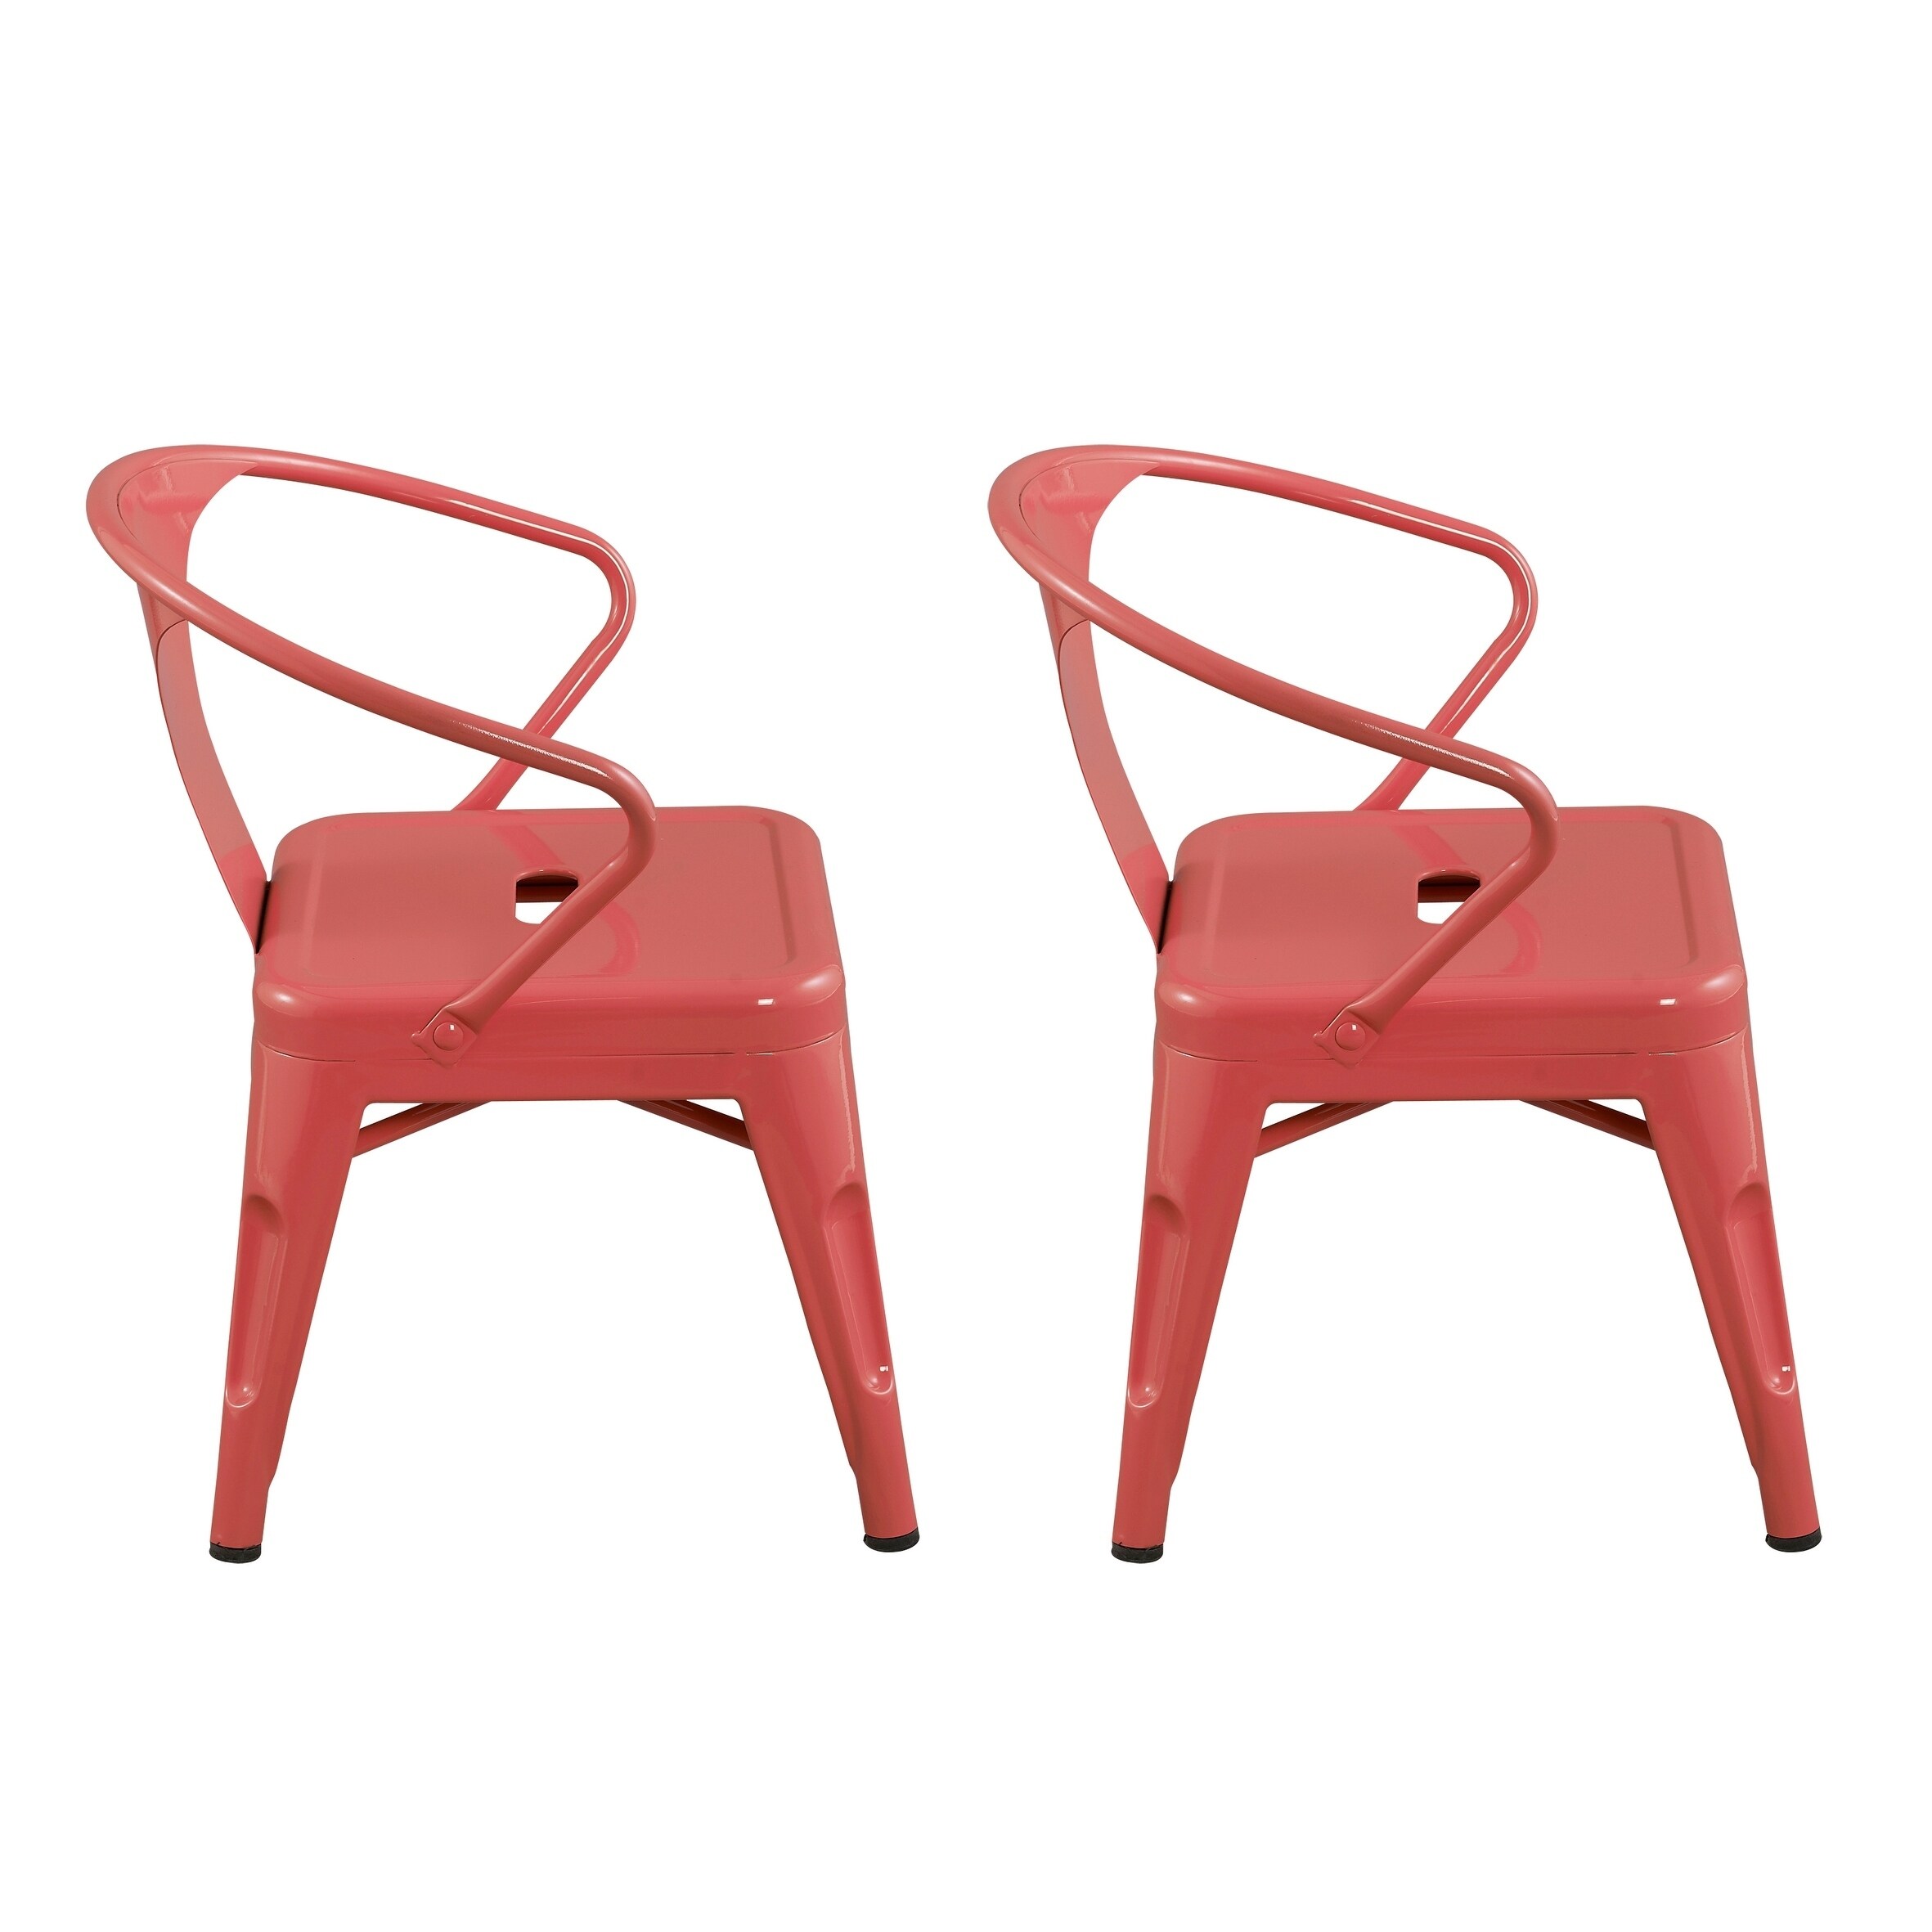 NUI&Kids Kids Activity Chairs (2pk) | eBay